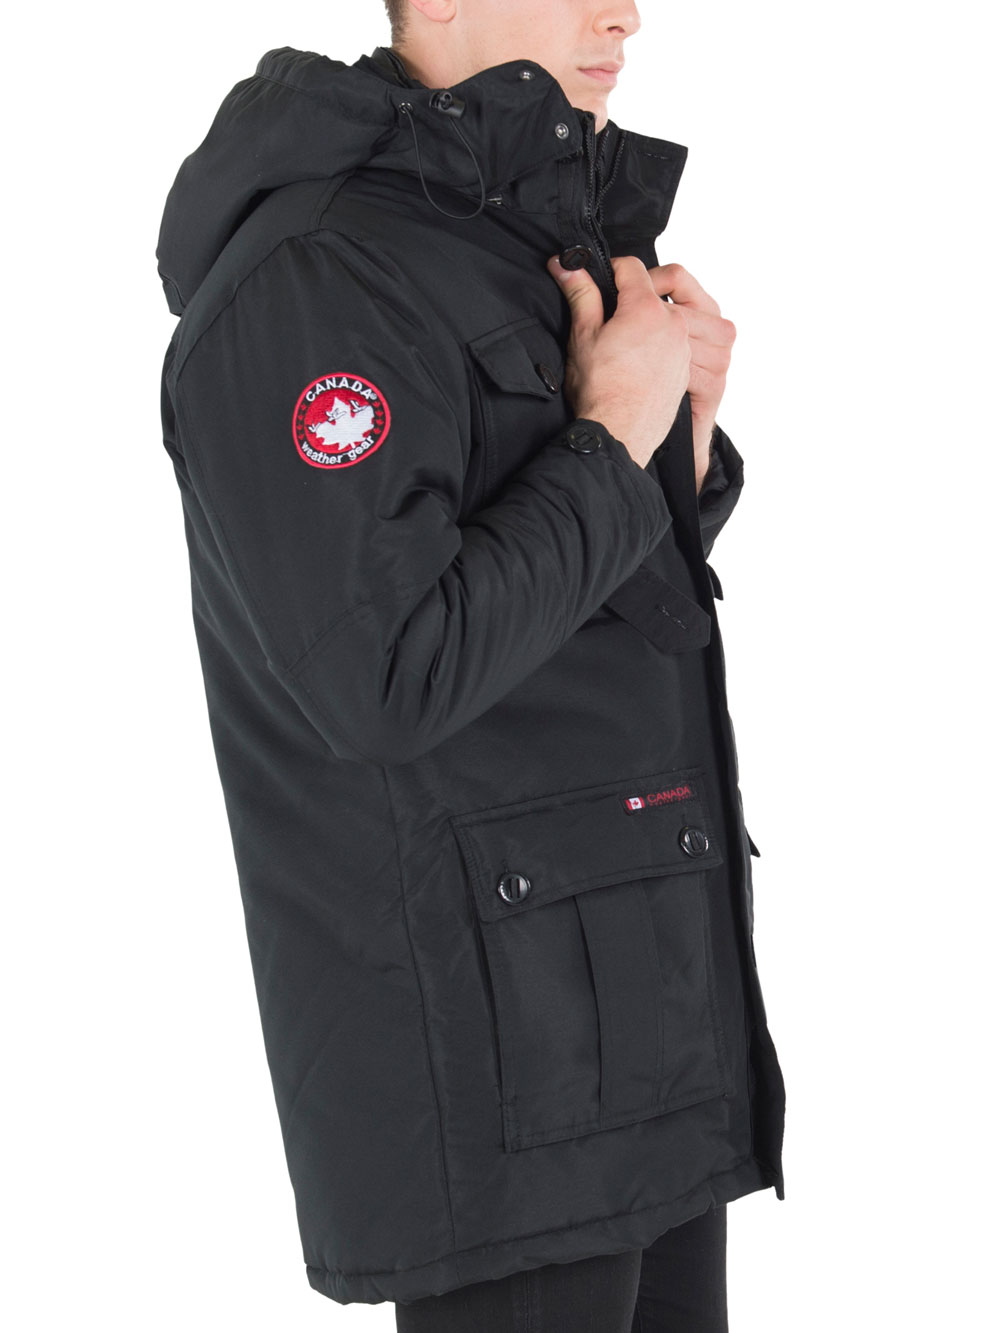 Canada Weather Gear Men's Insulated Parka | eBay